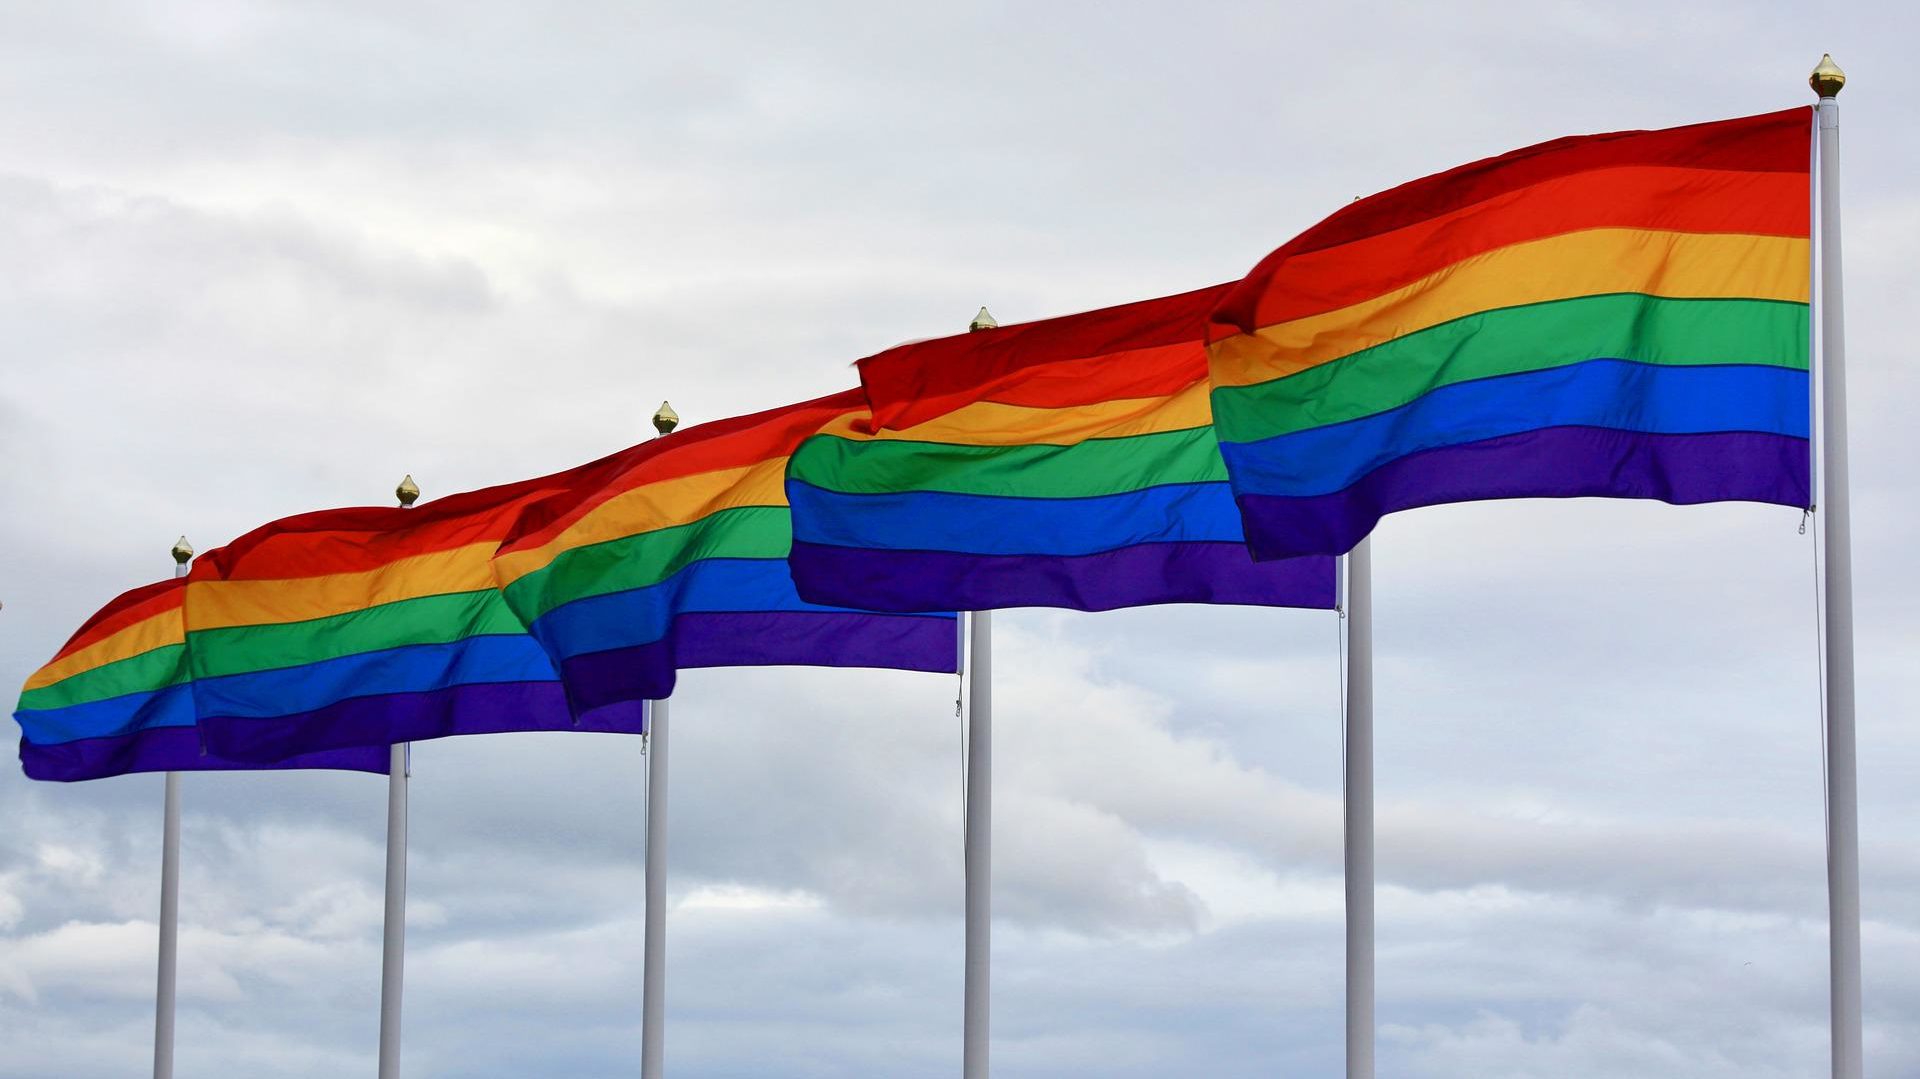 Kuwait Asks Public for Help Identifying Pride Flag Displays